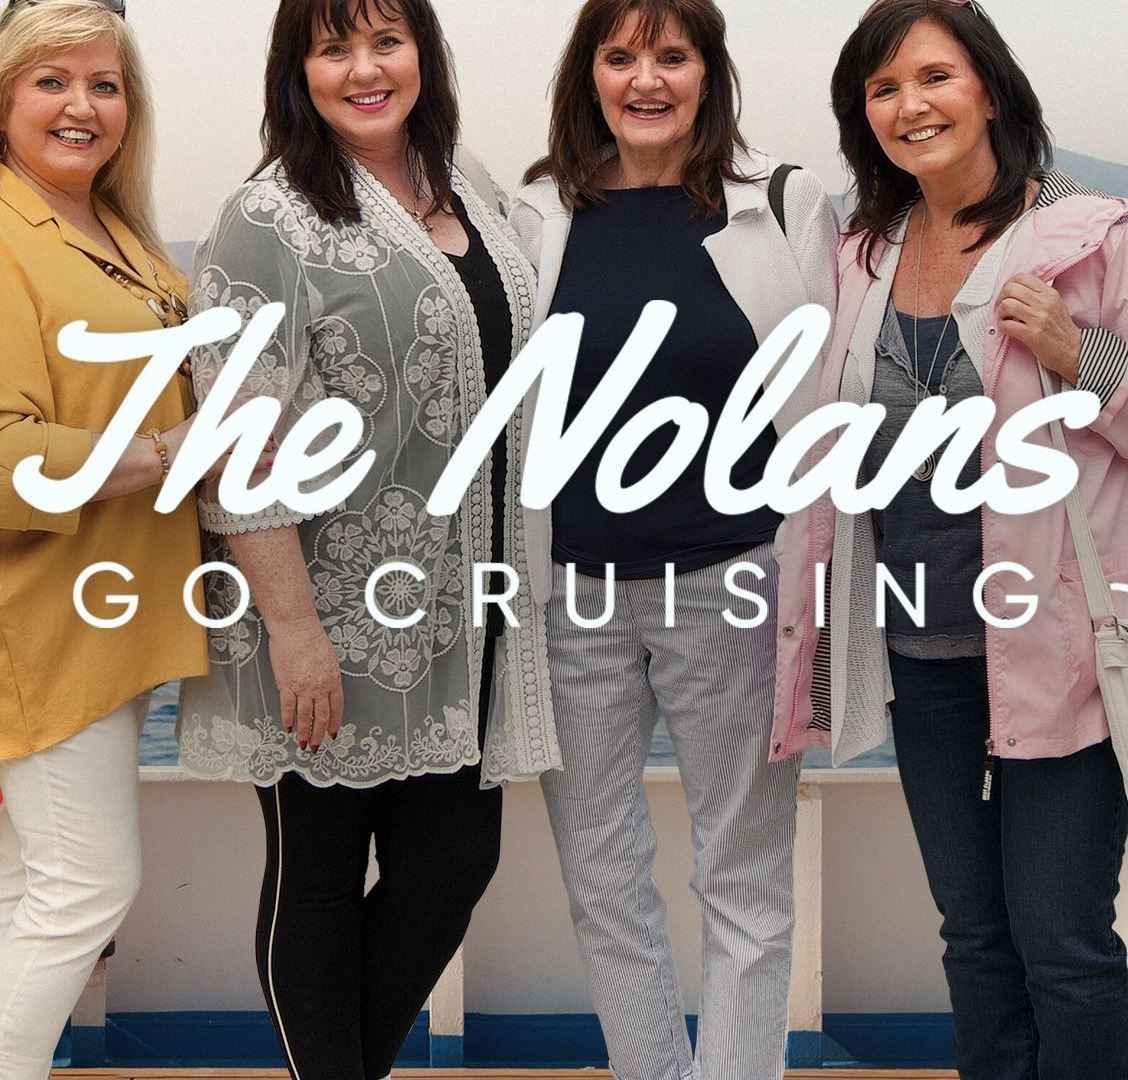 Show The Nolans Go Cruising